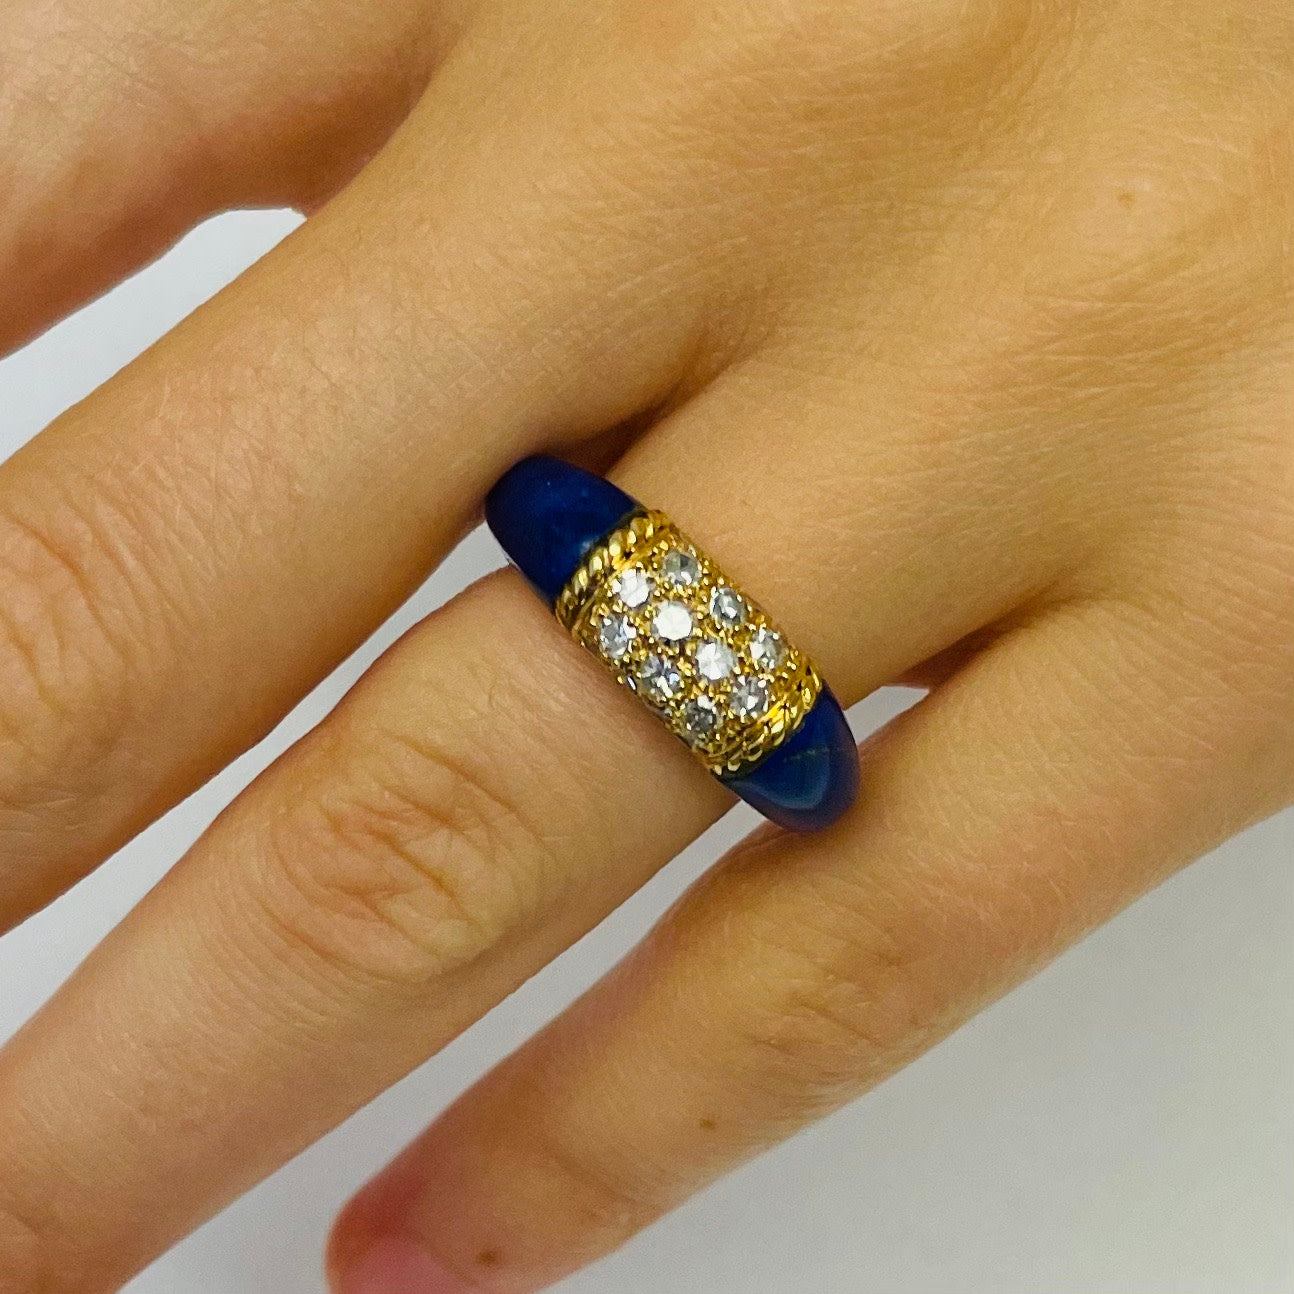 Van Cleef & Arpels 1970s 18KT Yellow Gold Lapis Lazuli & Diamond Ring worn on finger